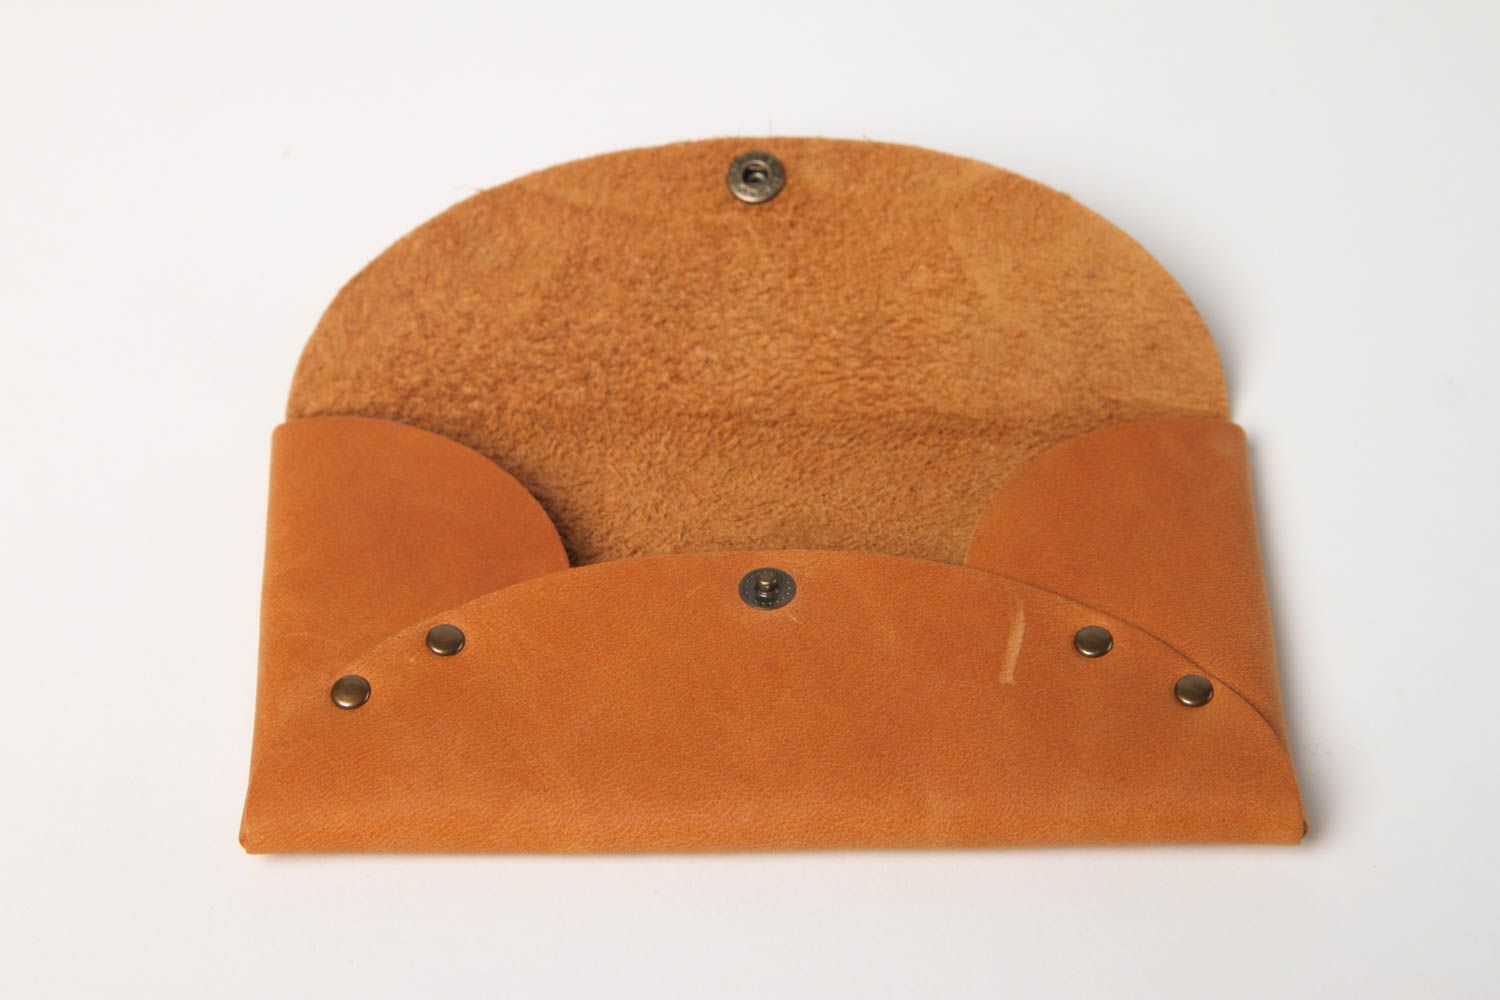 Stylish handmade leather wallet elegant wallet for women leather goods photo 4